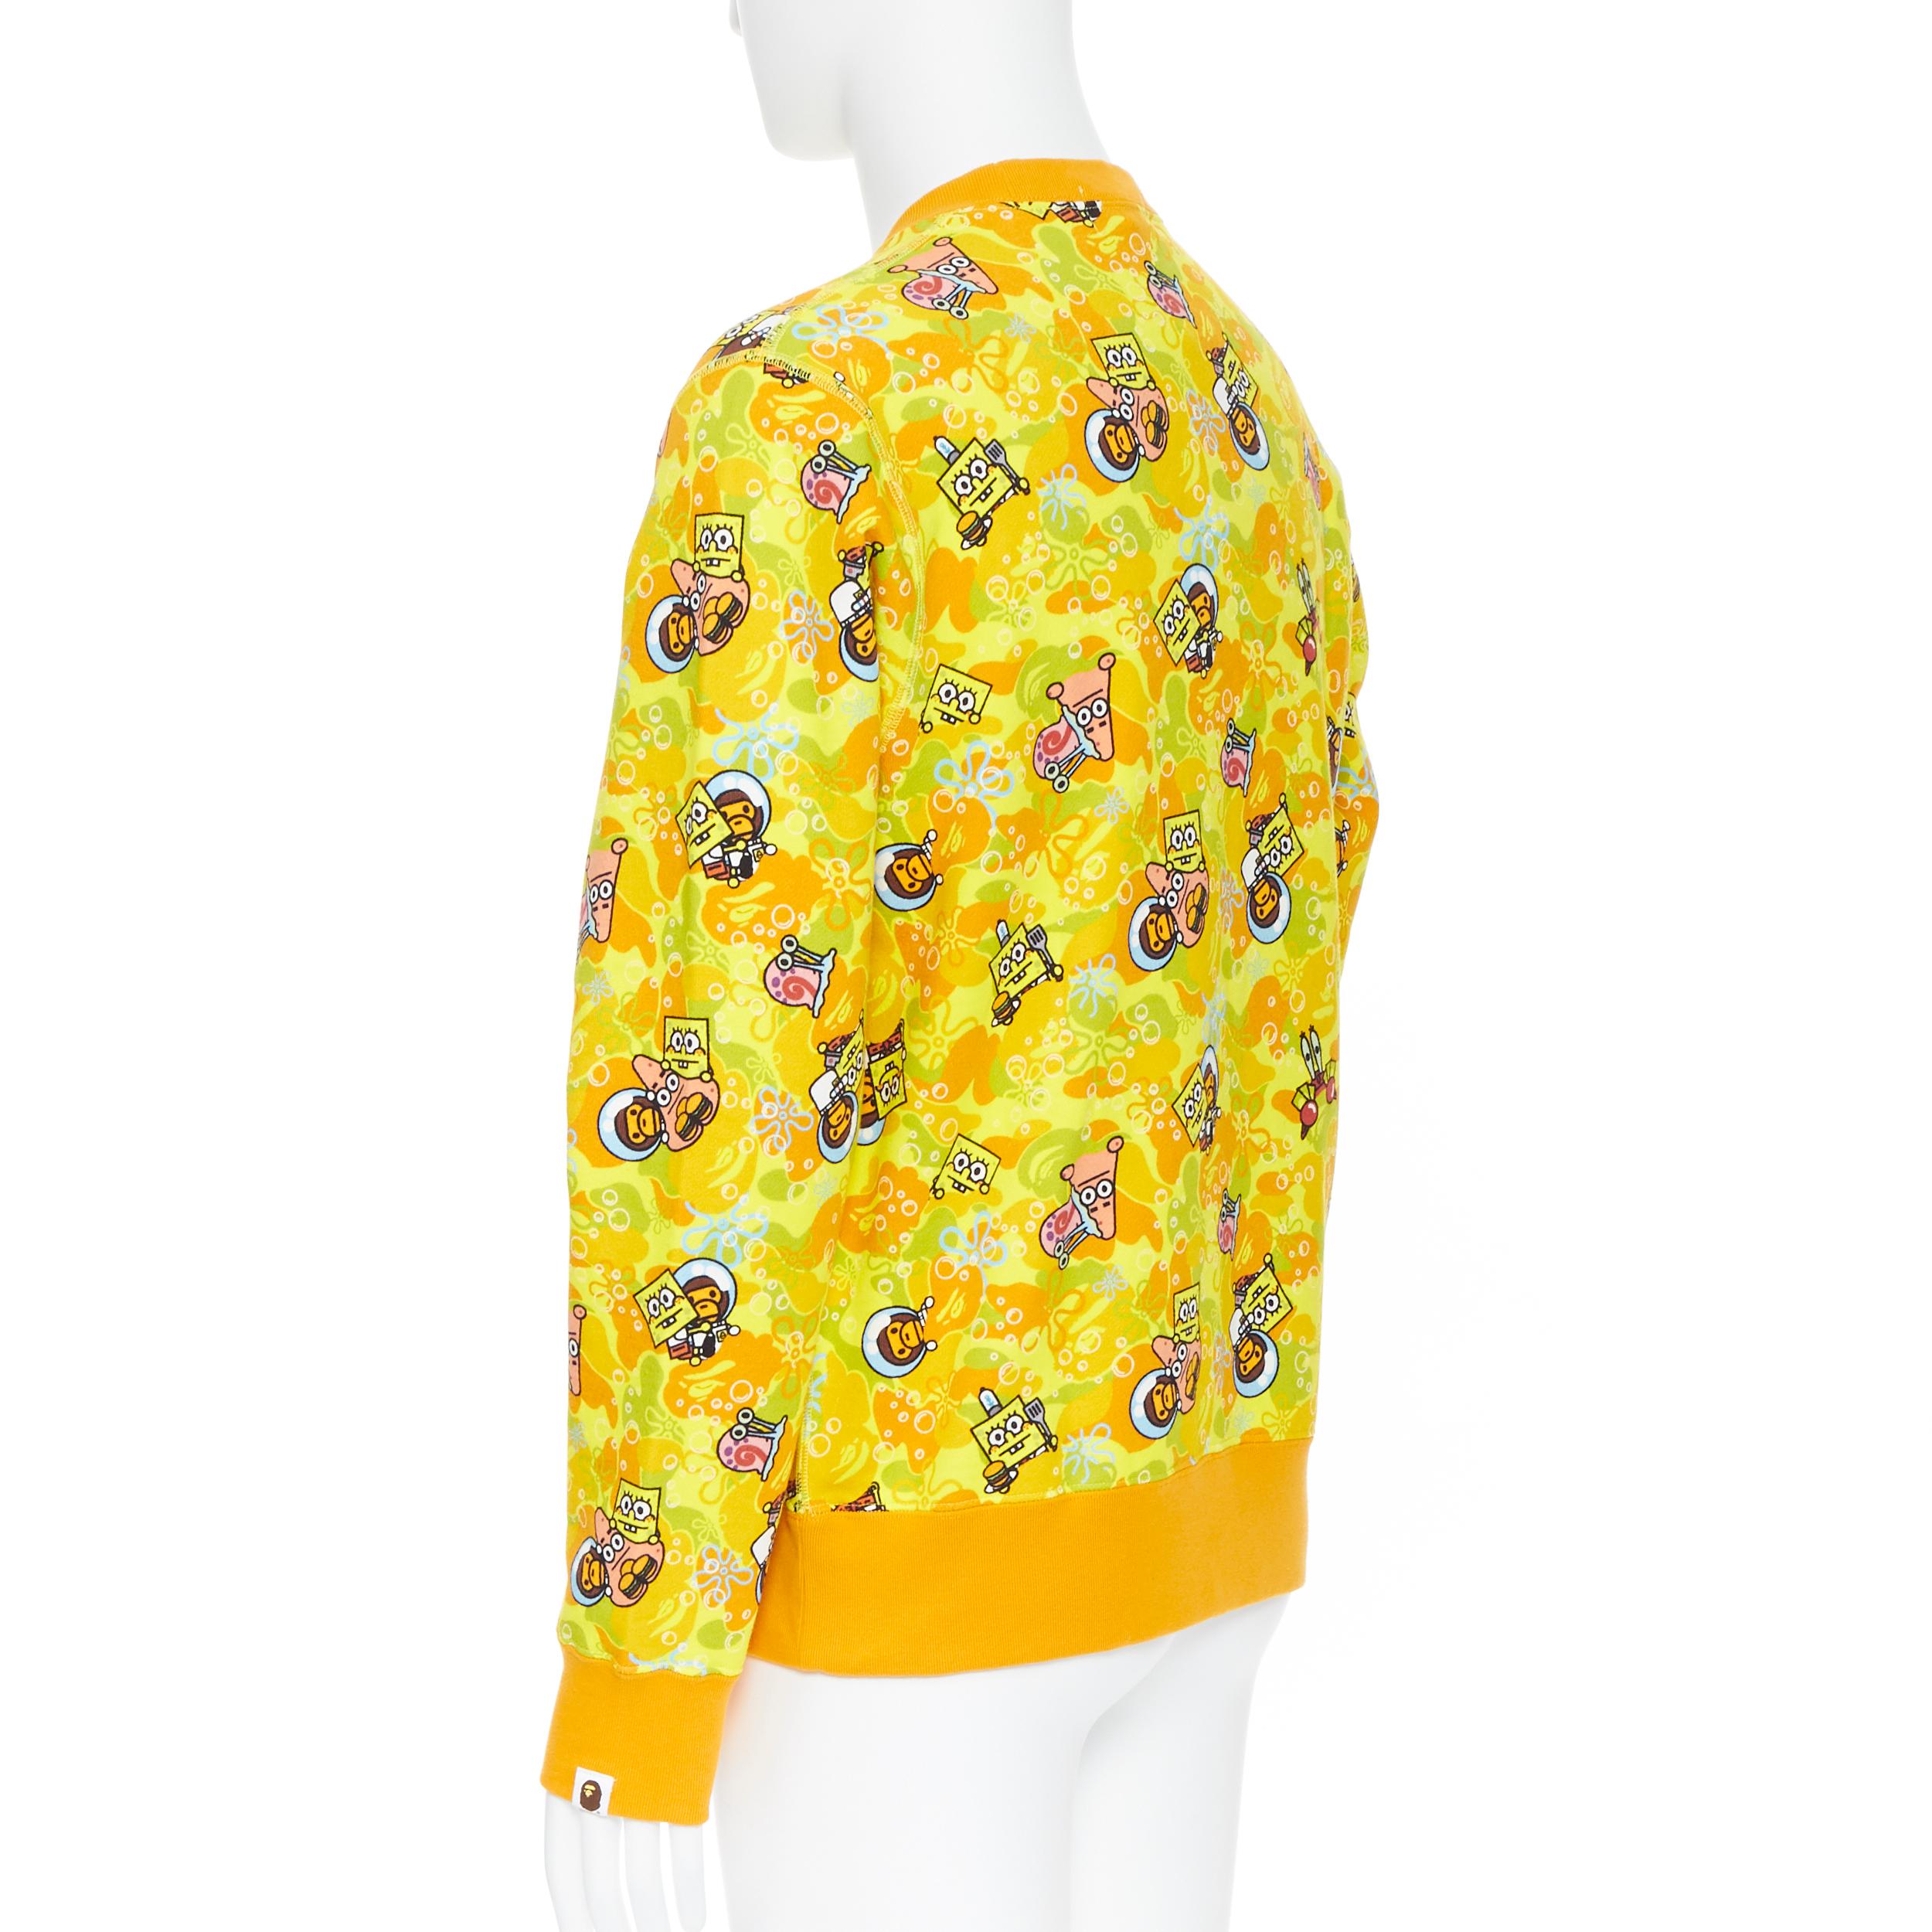 Men's new BATHING APE BAPE SPONGEBOB SQUAREPANTS yellow camo print pullover sweater L